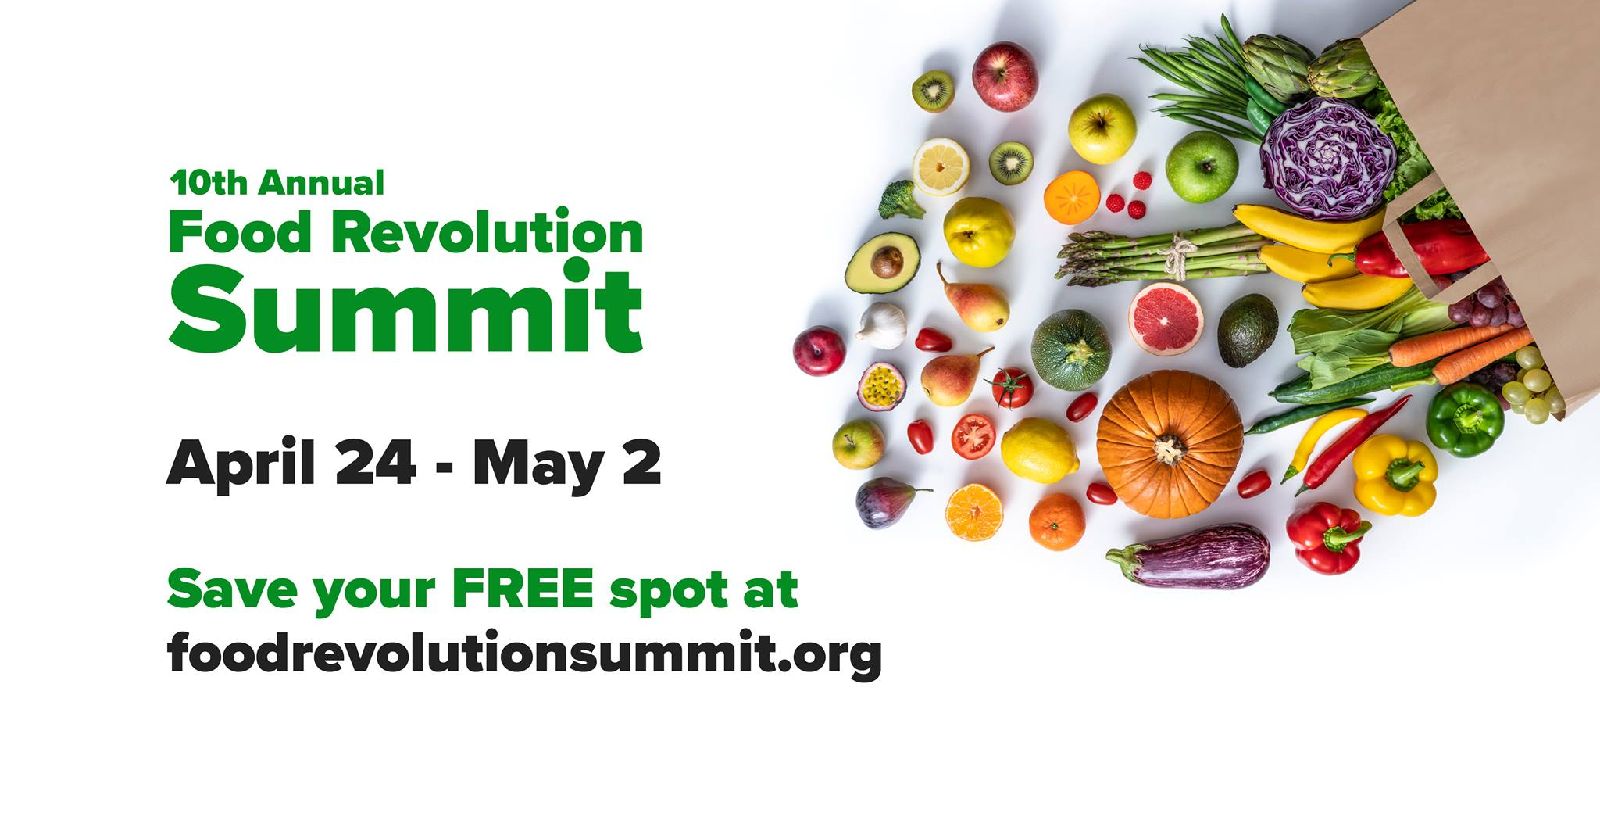 10th Annual Food Revolution Summit